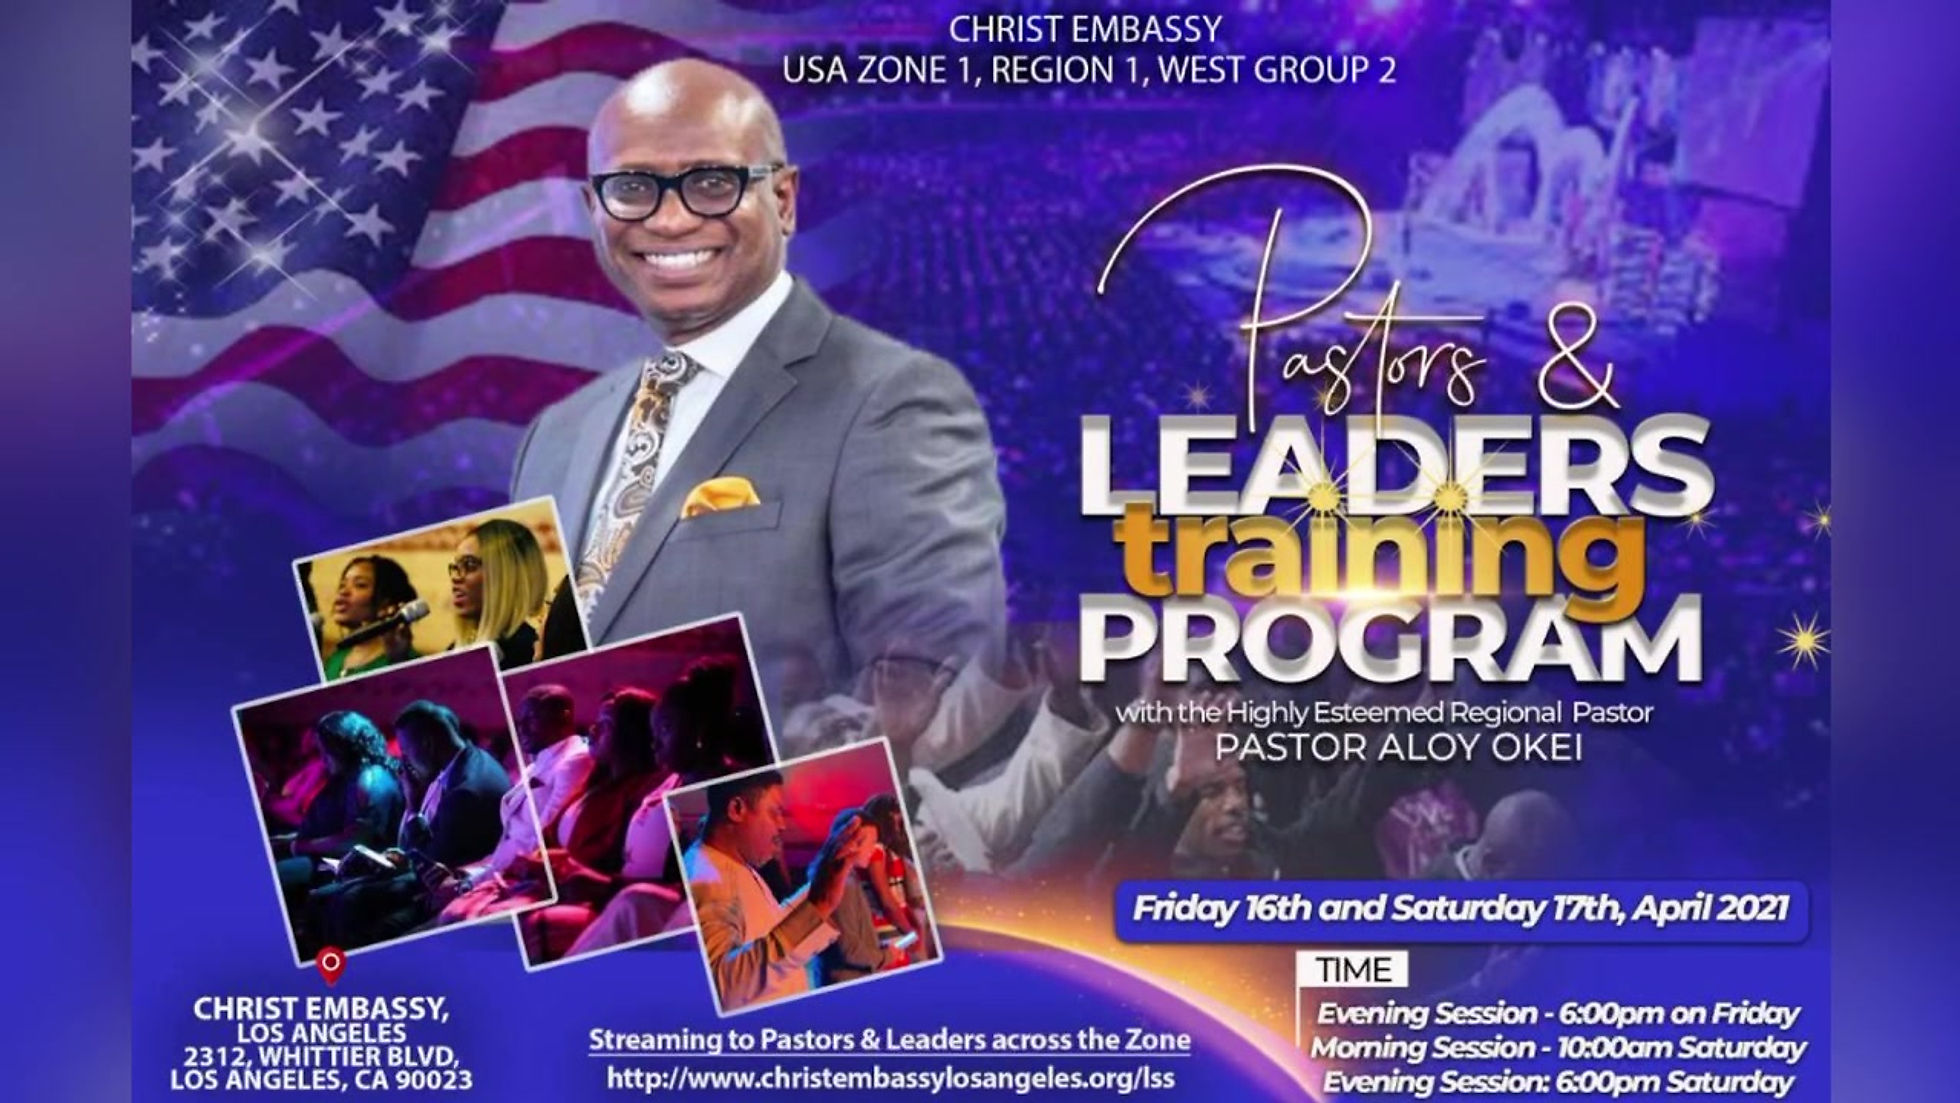 Pastors & Leaders Training Program